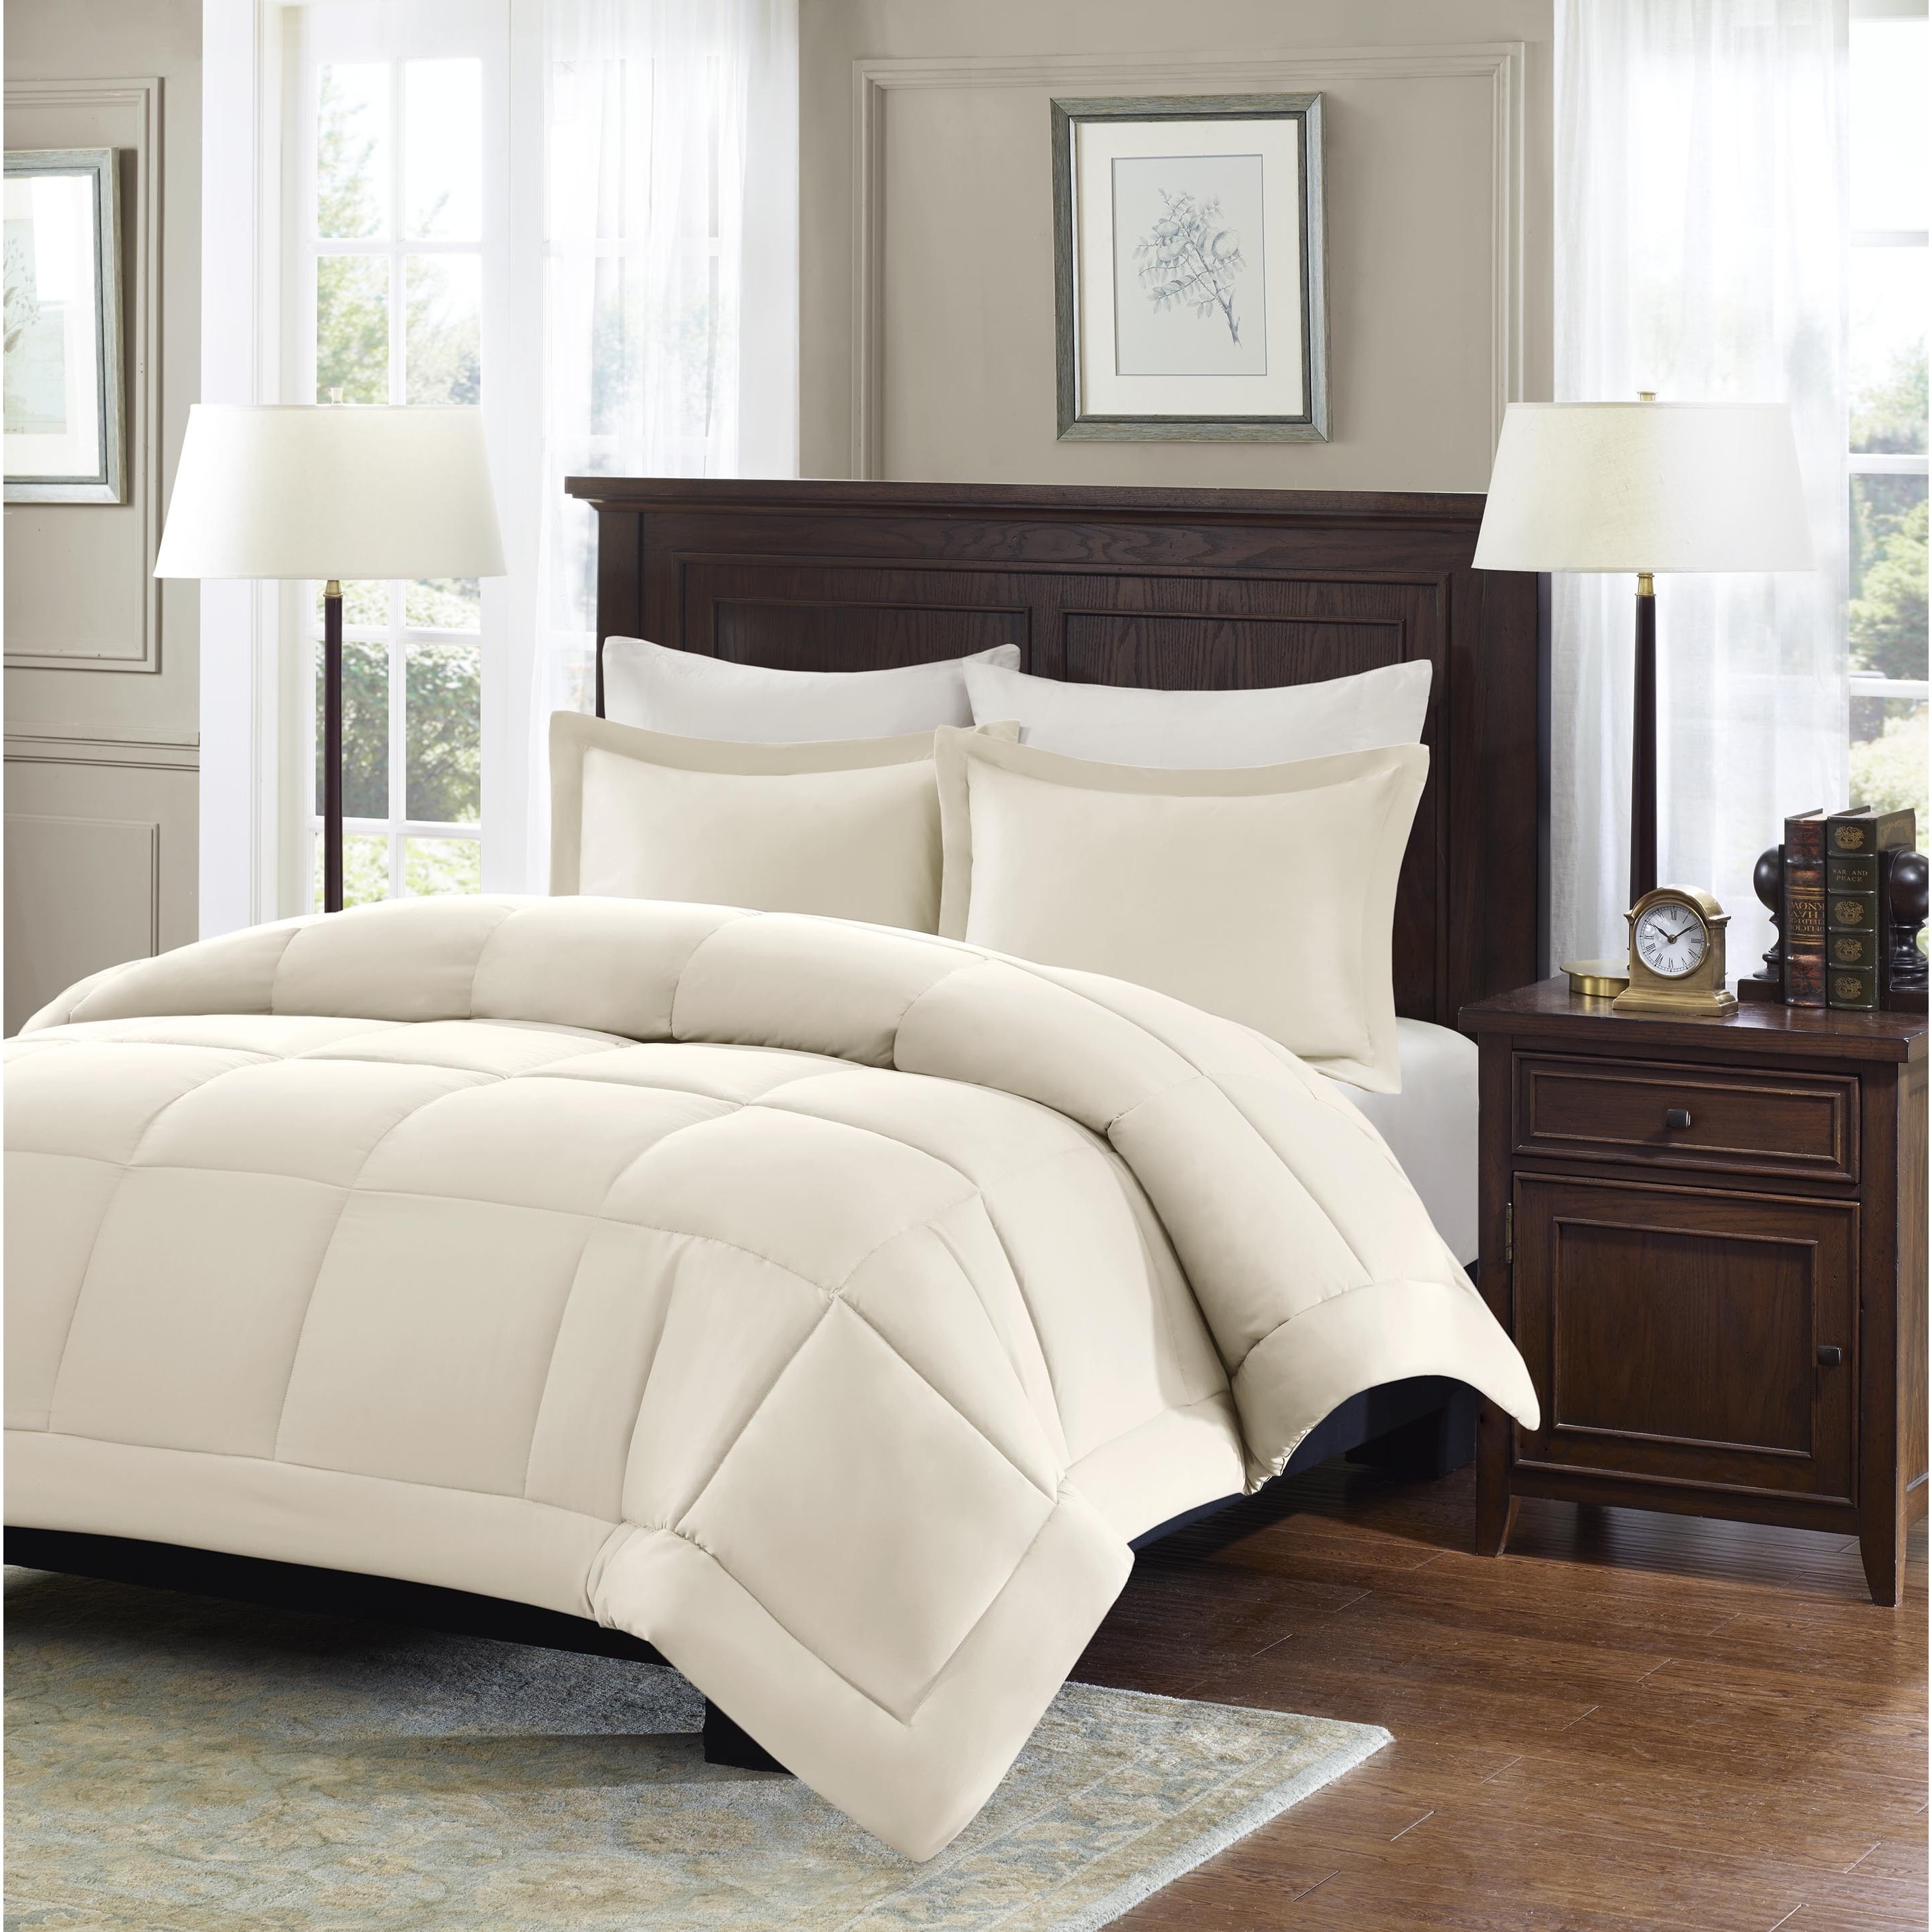 Comfort Classics Belford Microcell Down Alternative Comforter Set, Grey, King/Cal King - image 2 of 5